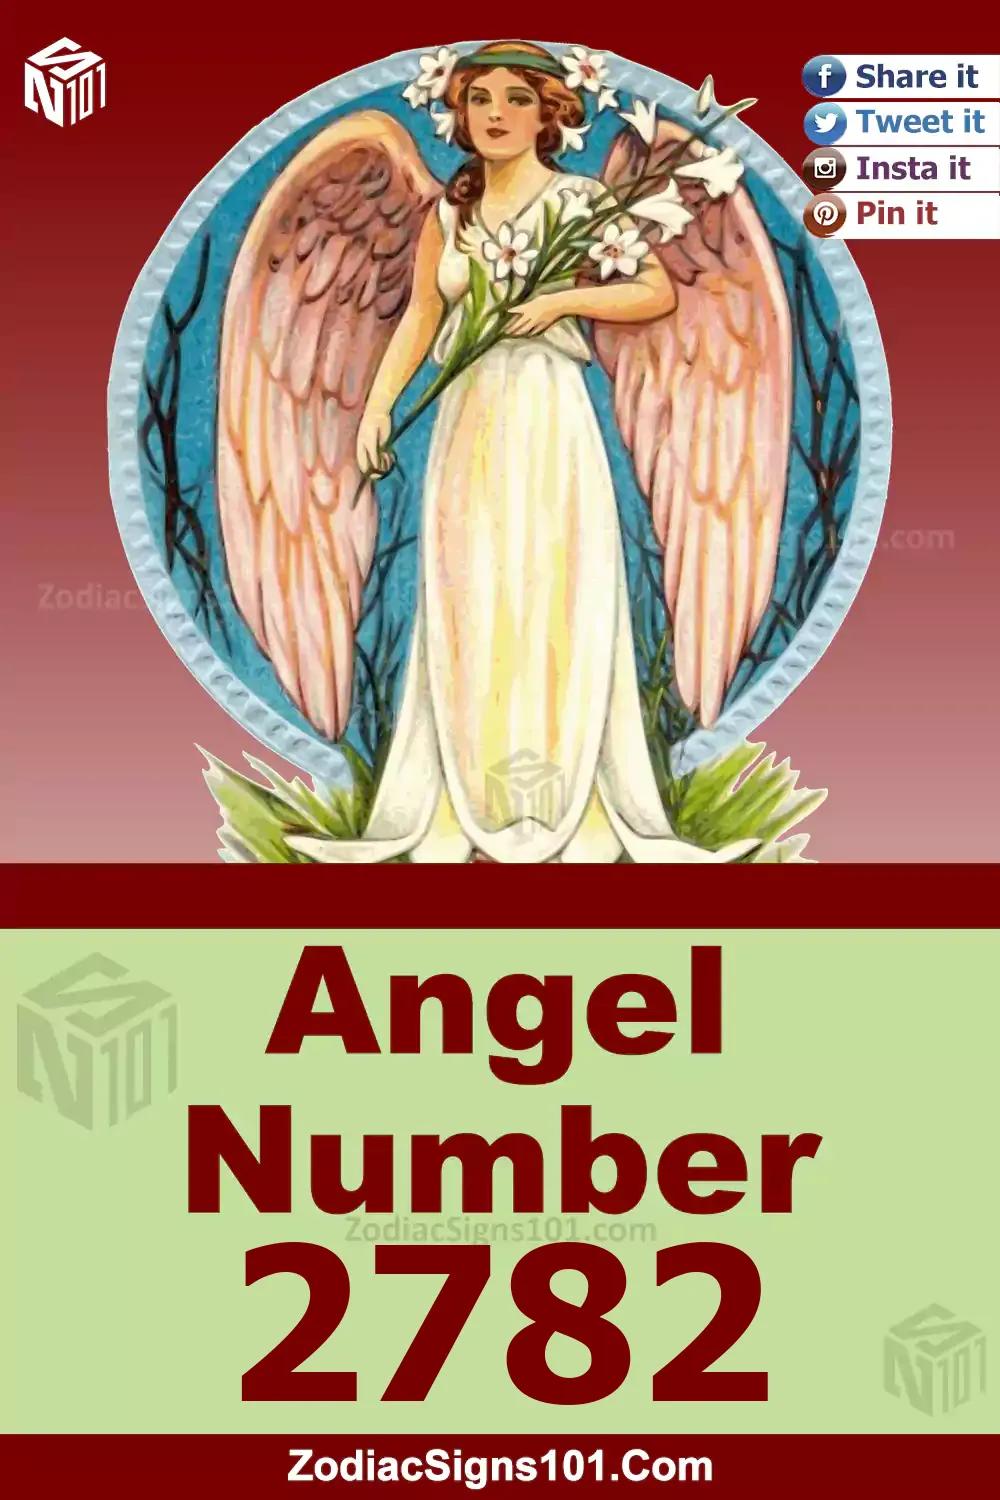 2782-Angel-Number-Meaning.jpg